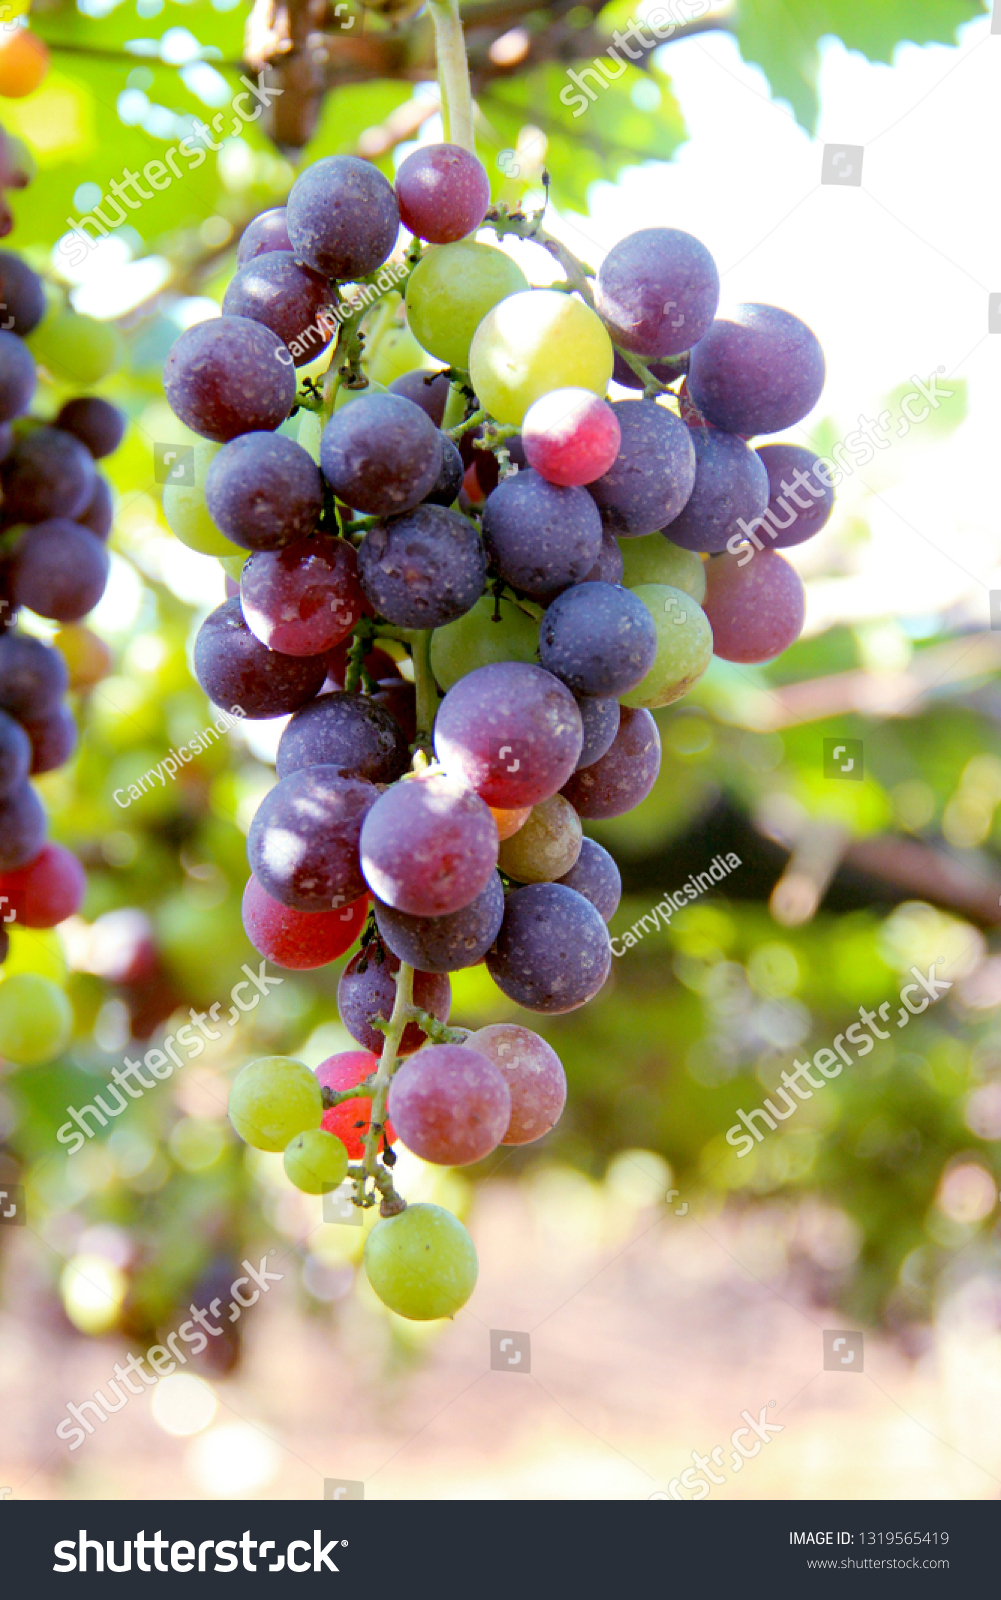 beautiful grapes images #1319565419